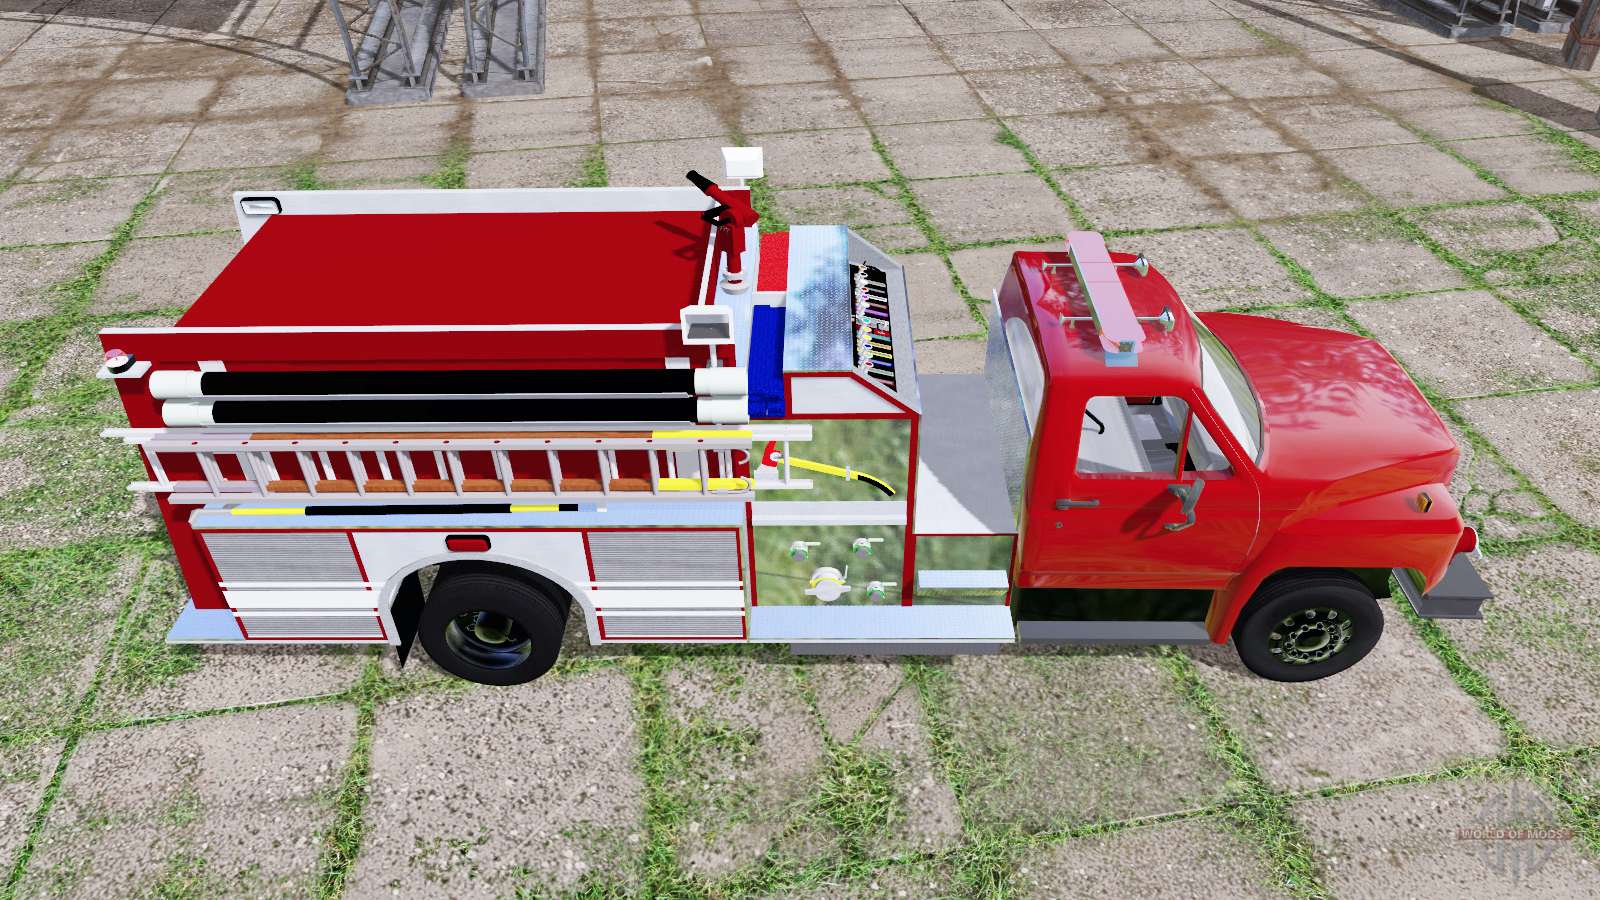 fs19 fire truck